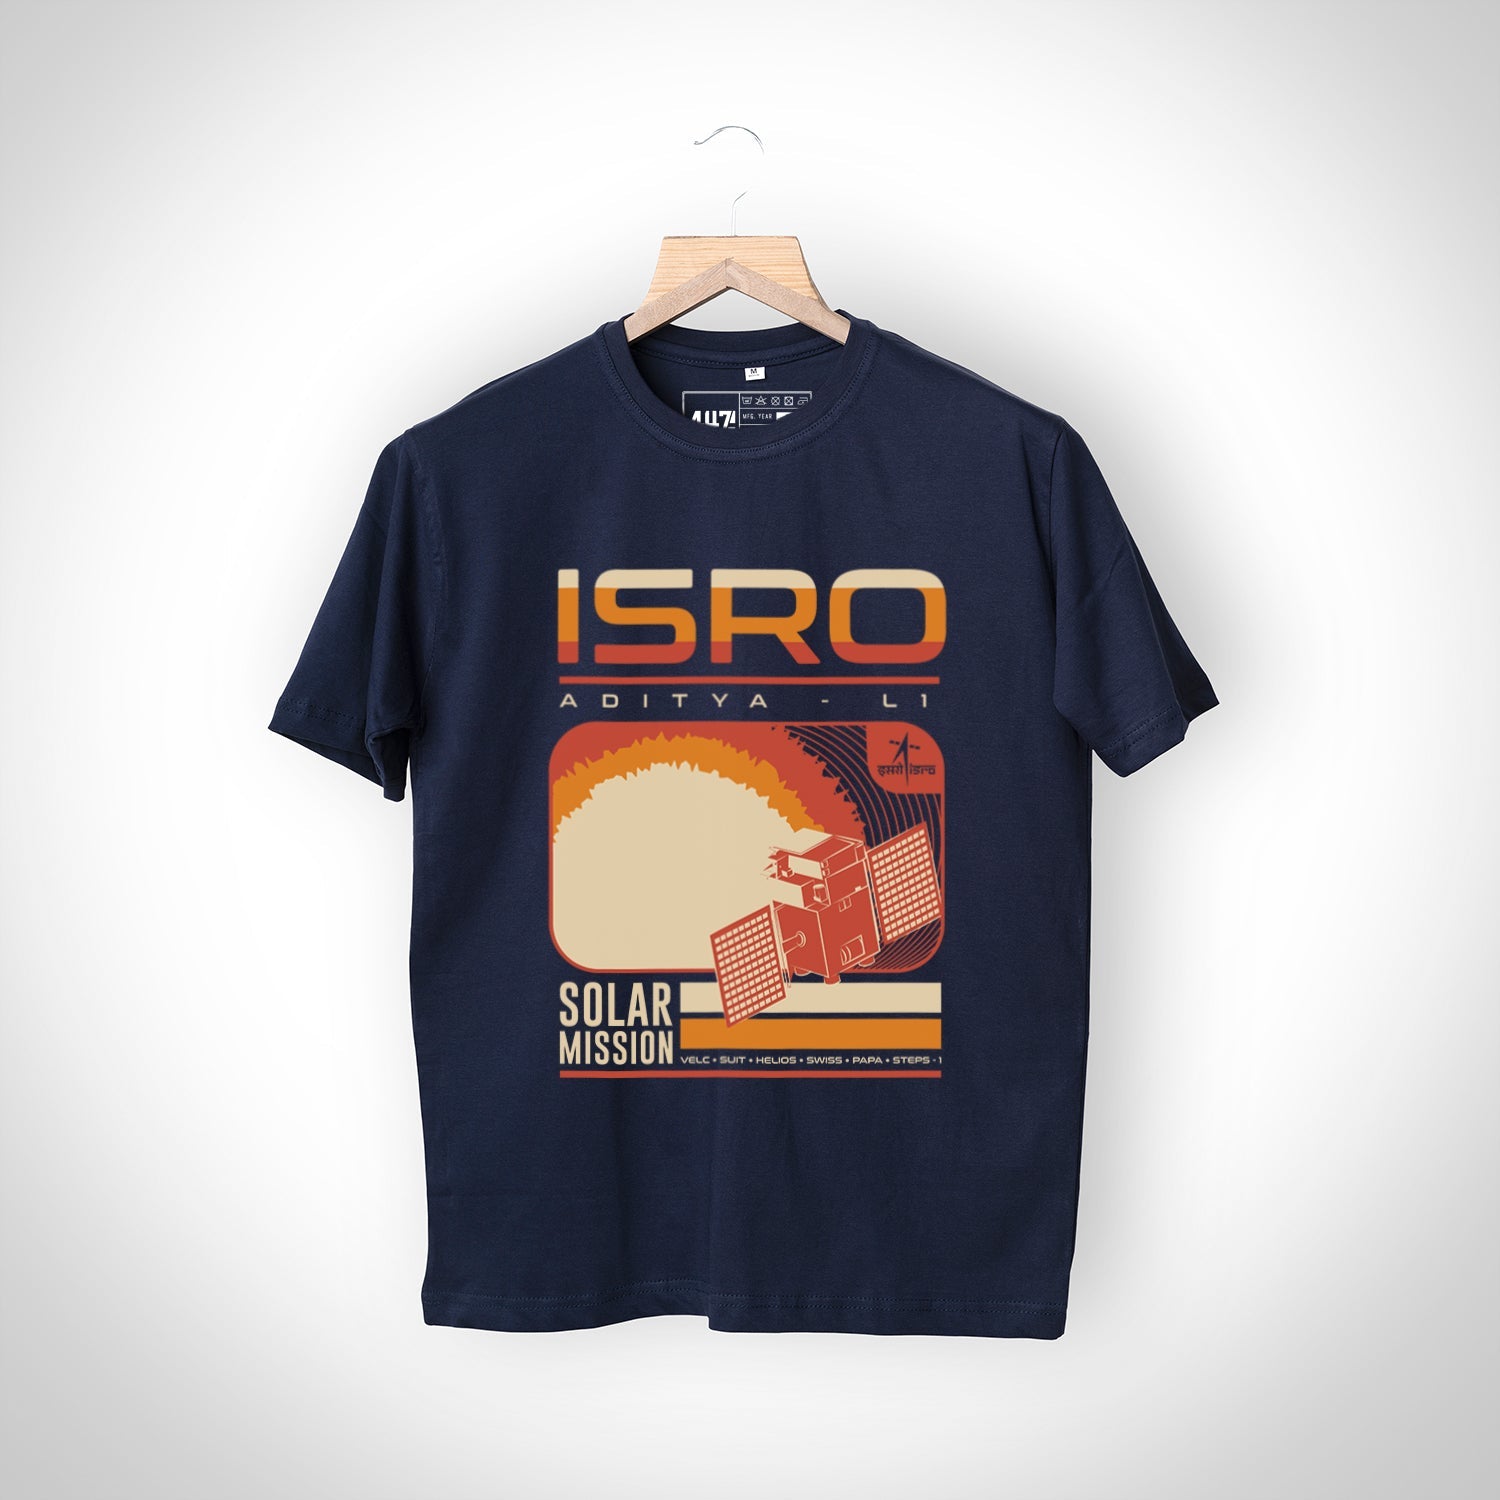 ISRO Navy Aditya L-1 T-Shirt -A47 - India - www.superherotoystore.com